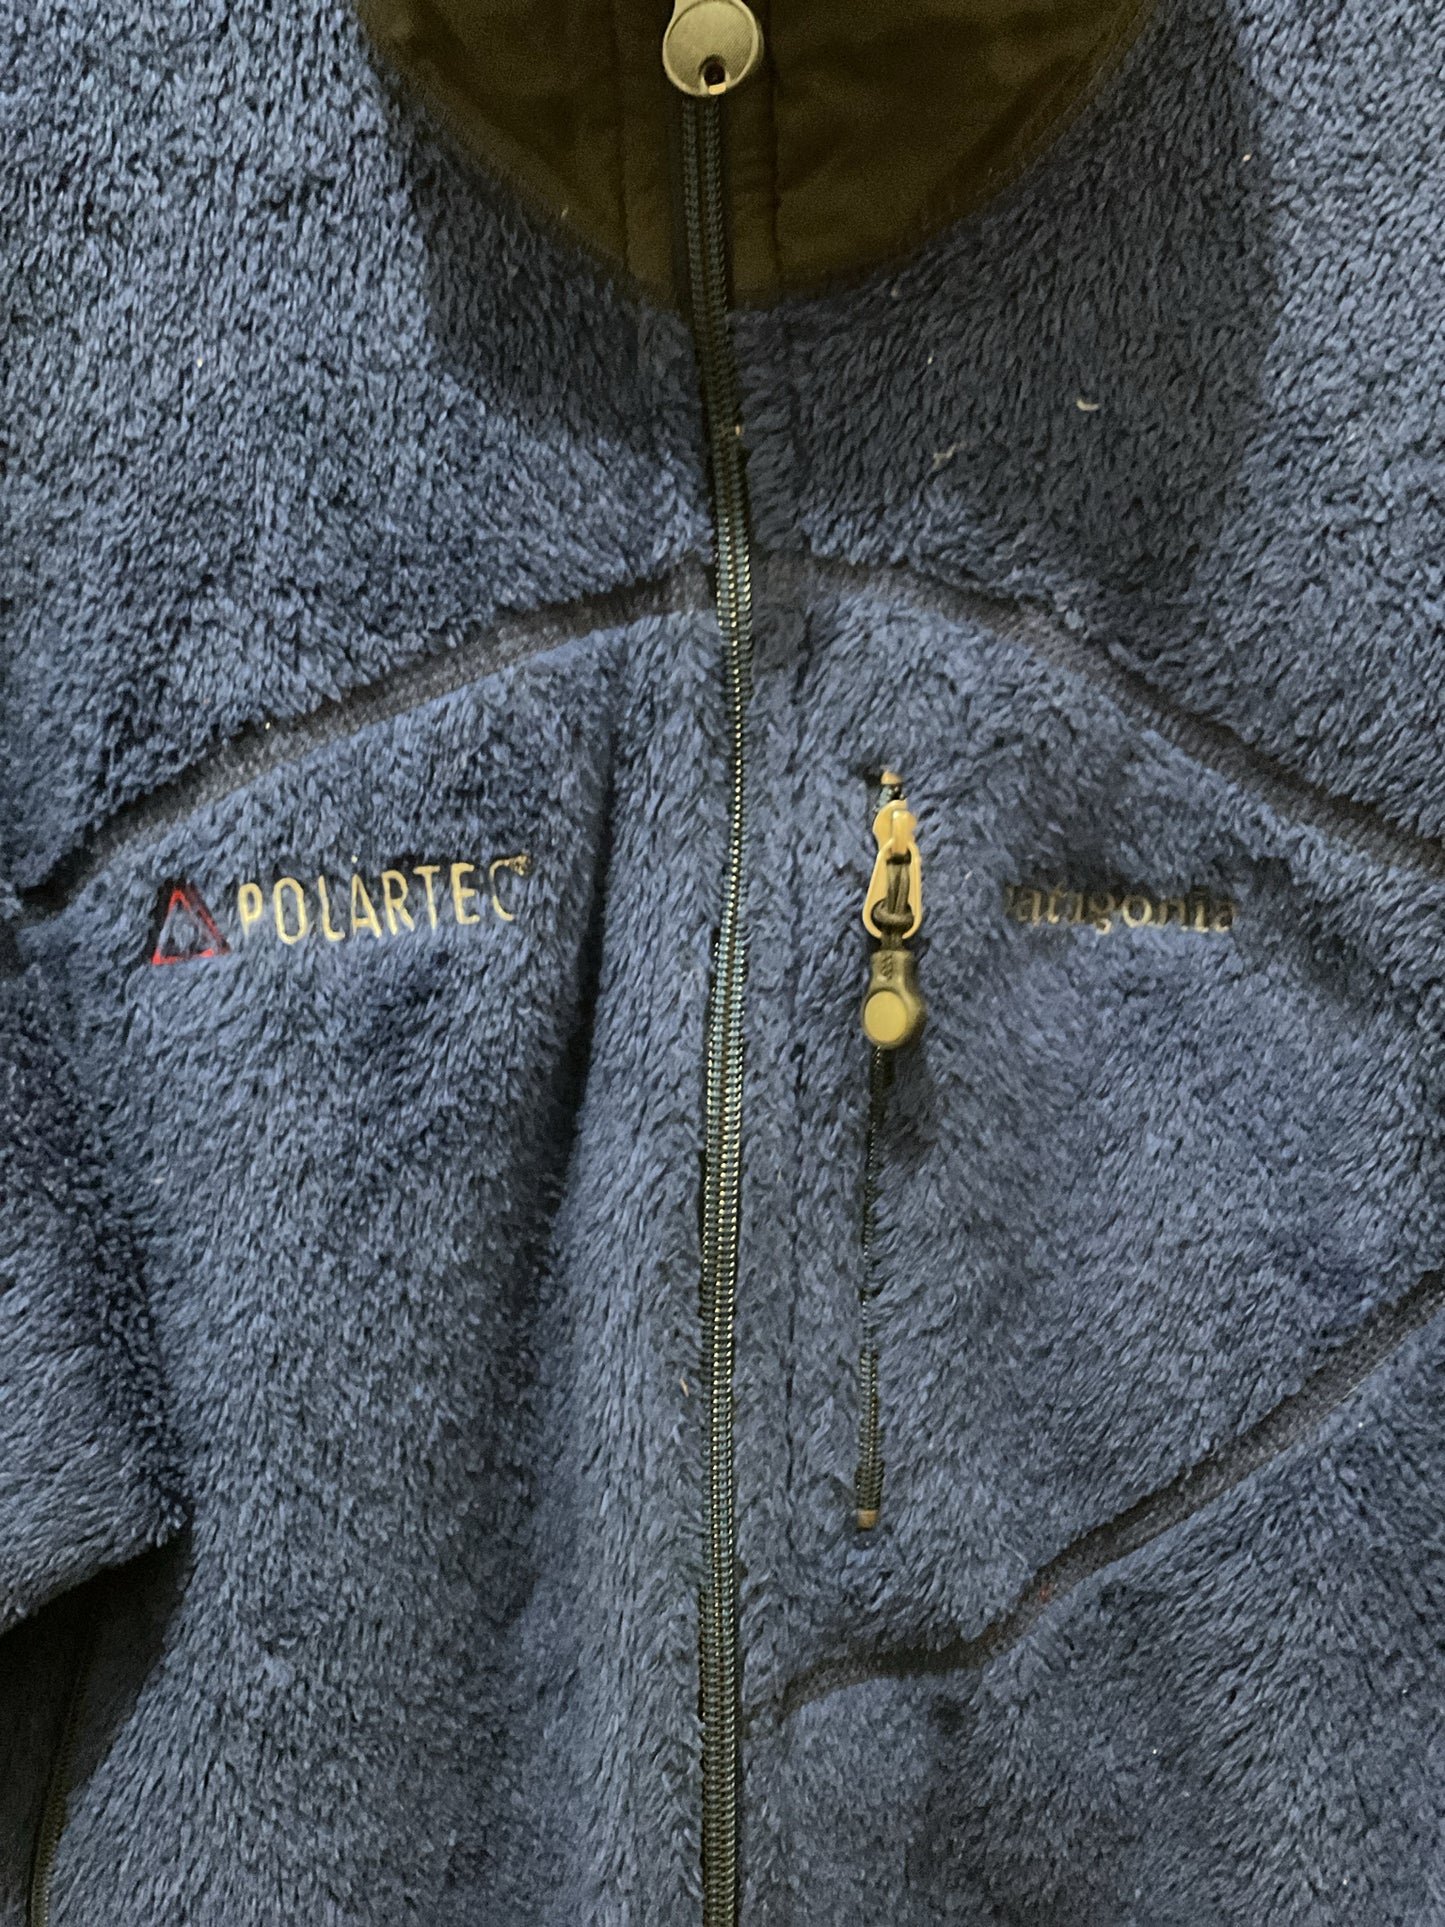 Patagonia Polartec Fleece Jacket Men's M